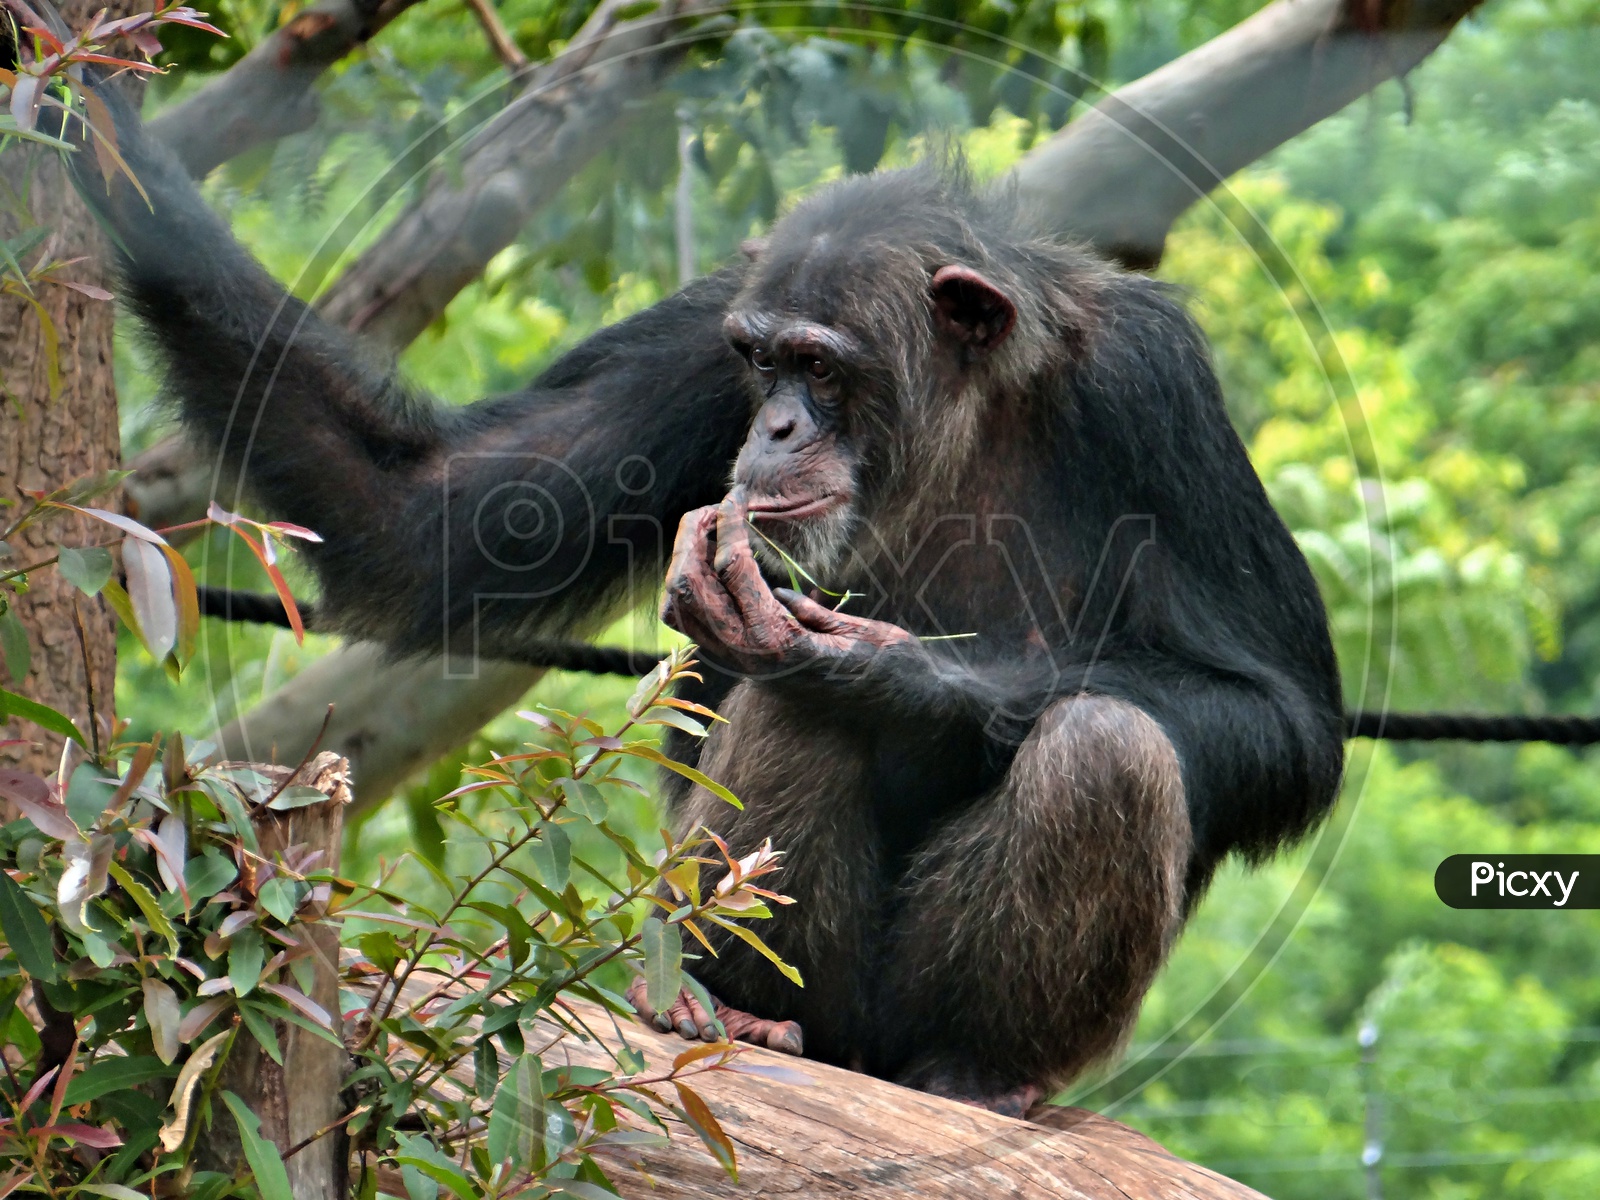 a monkey eating